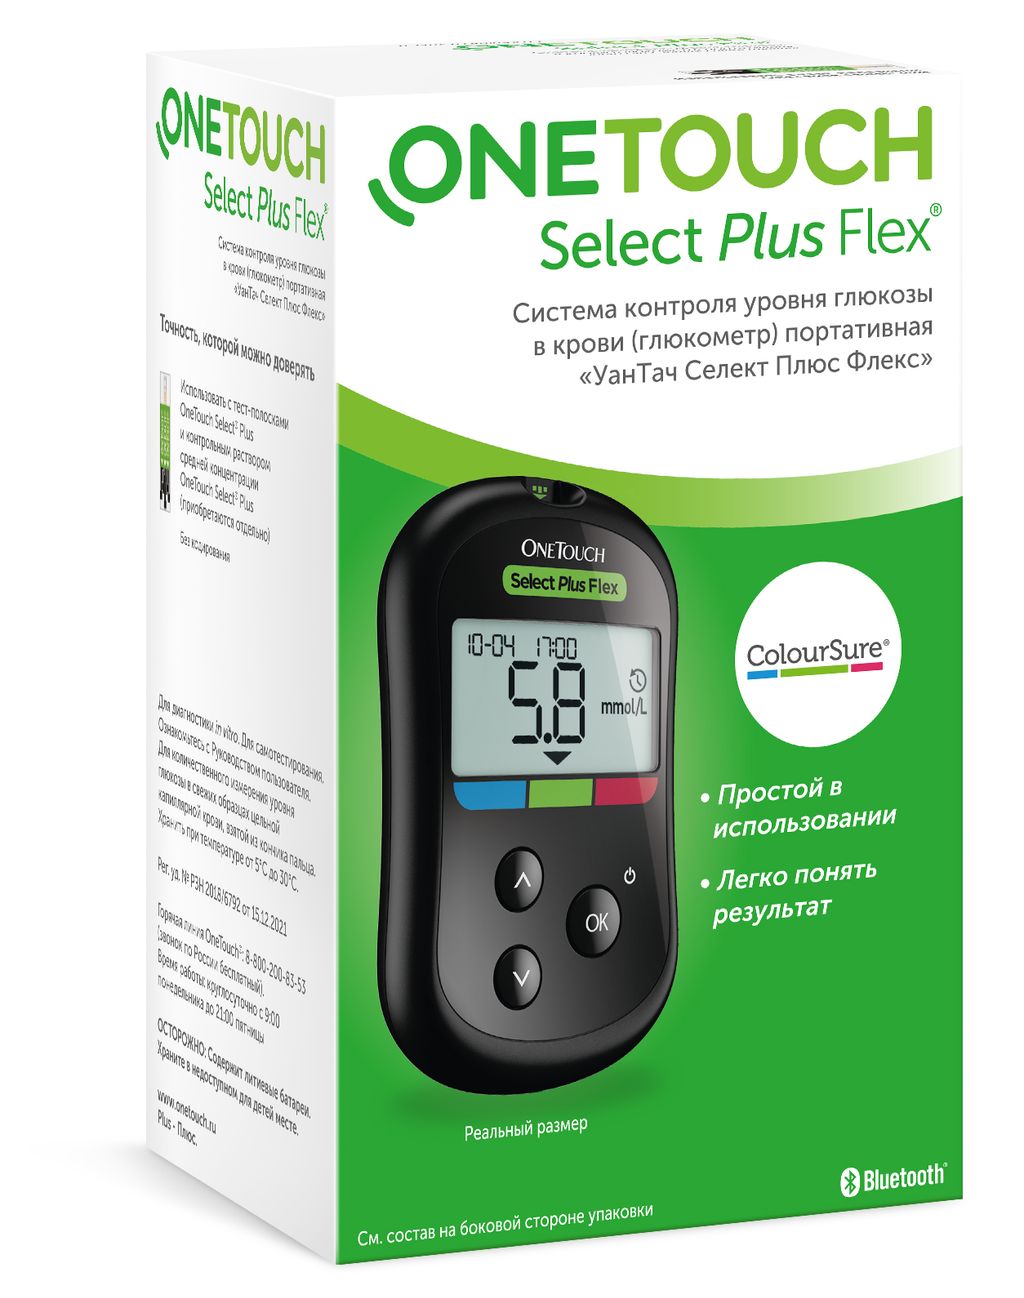 Глюкометр One Touch Select Plus Flex, 1 шт.